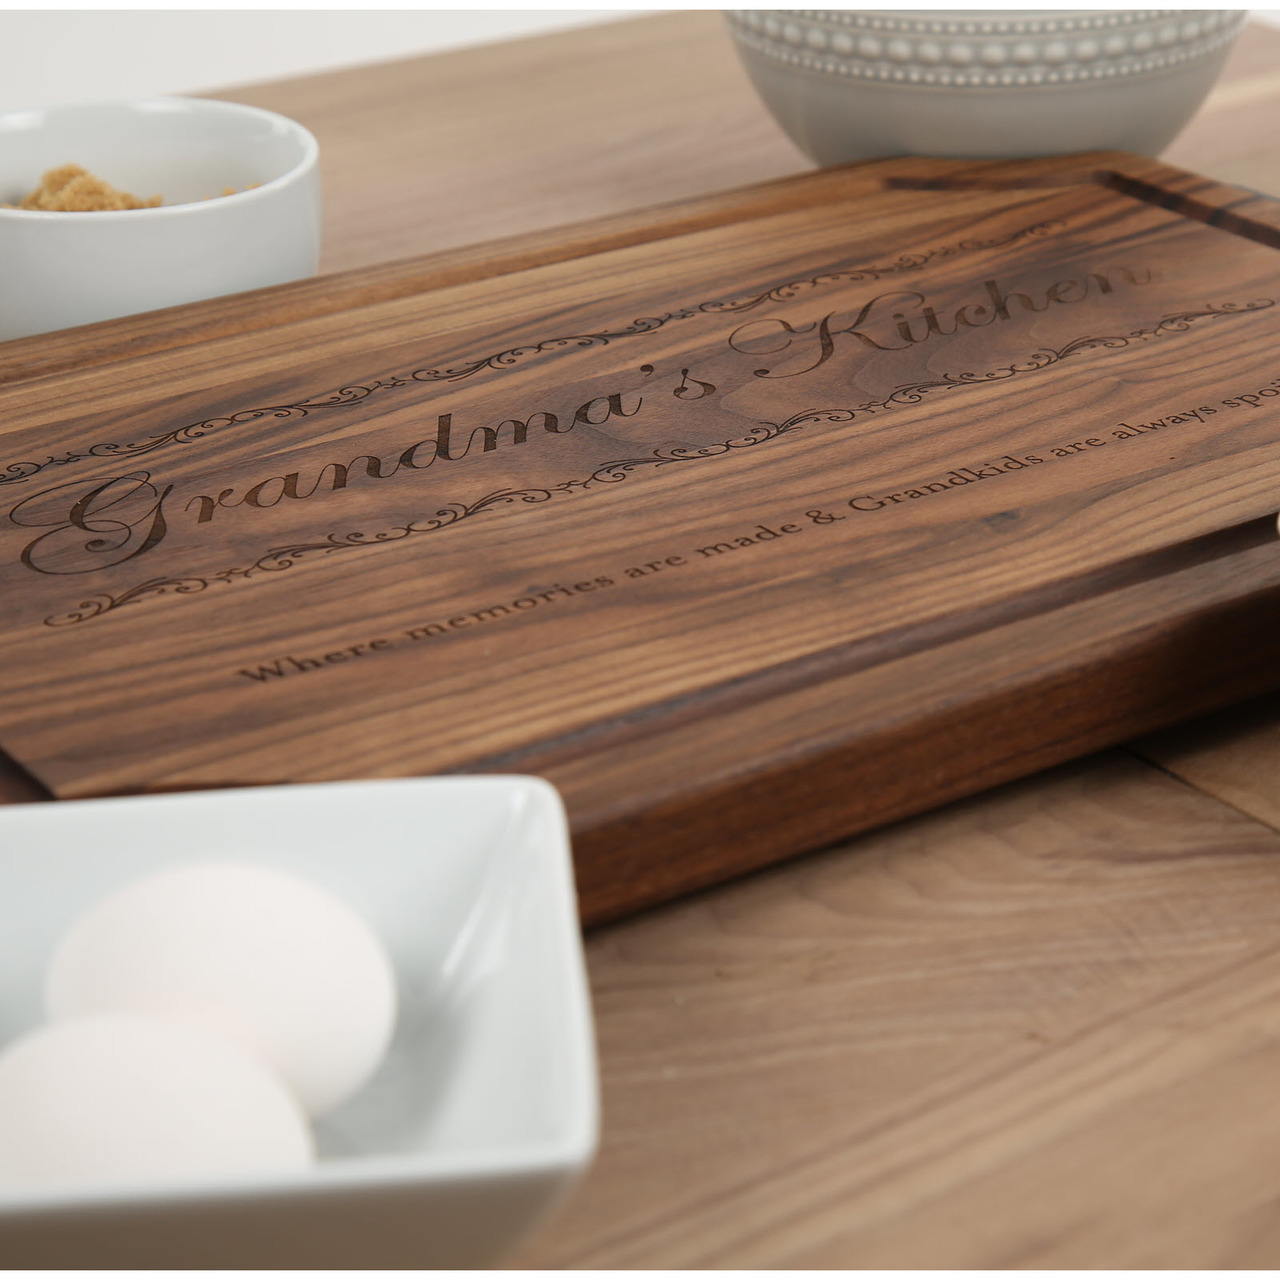 Grandma's Kitchen | Personalized Cutting Boards